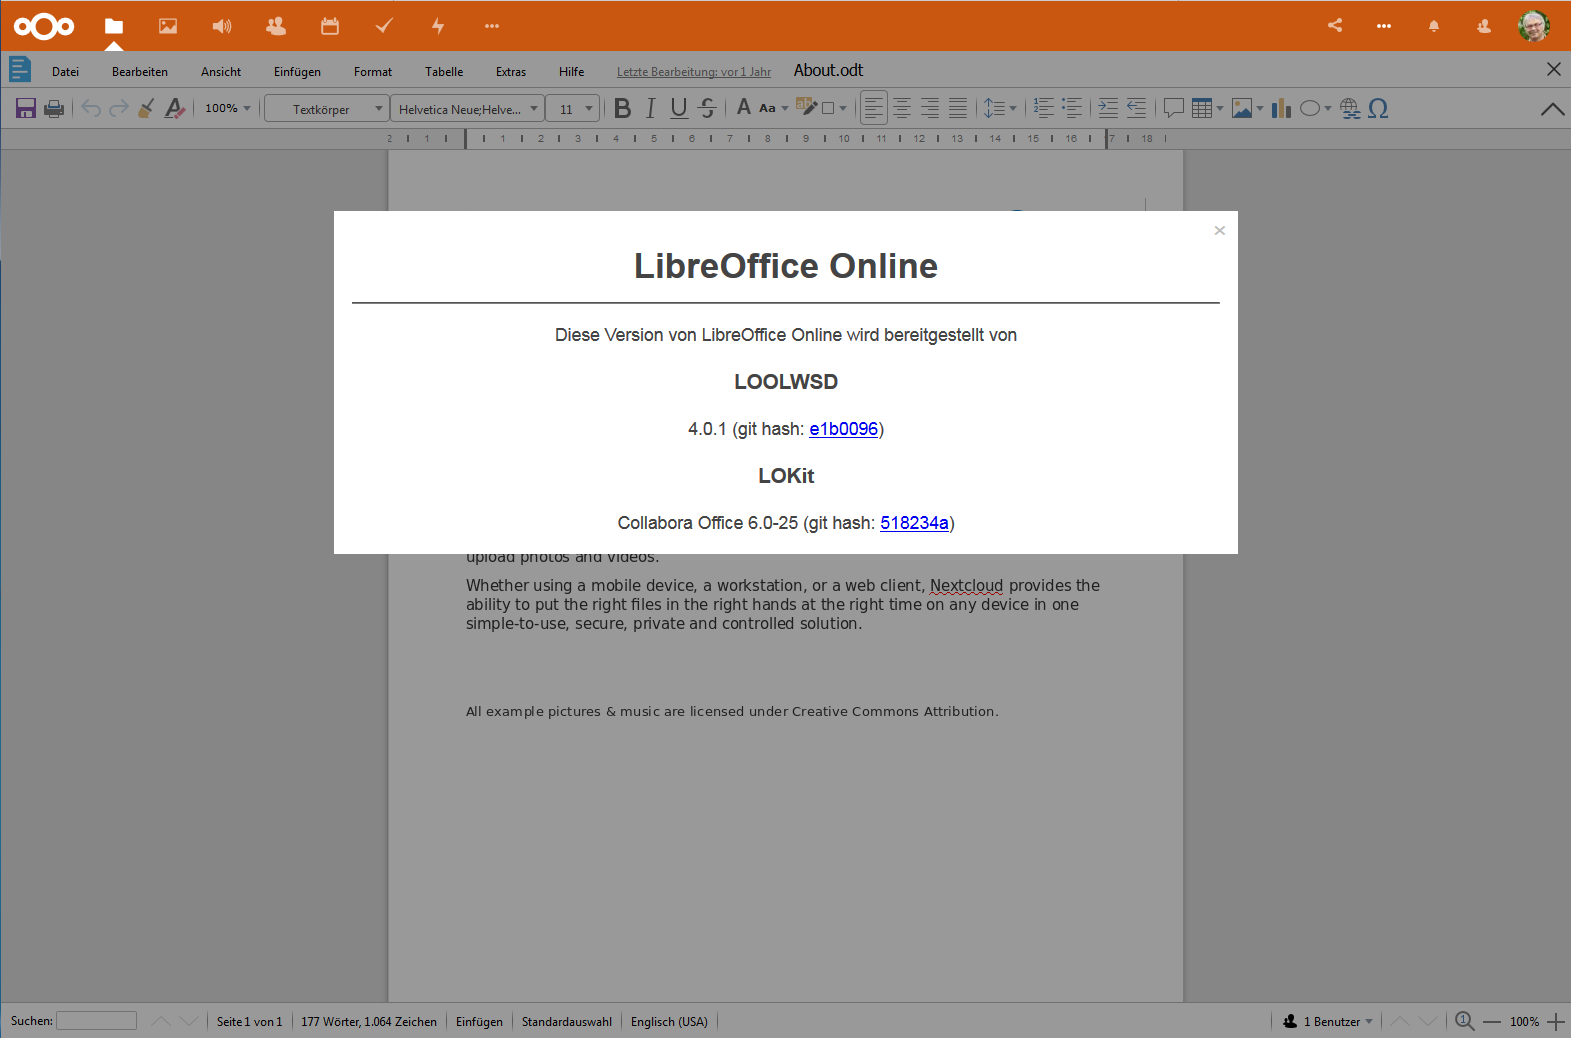 CollaboraOffice Online 4.0.1 in Nextcloud